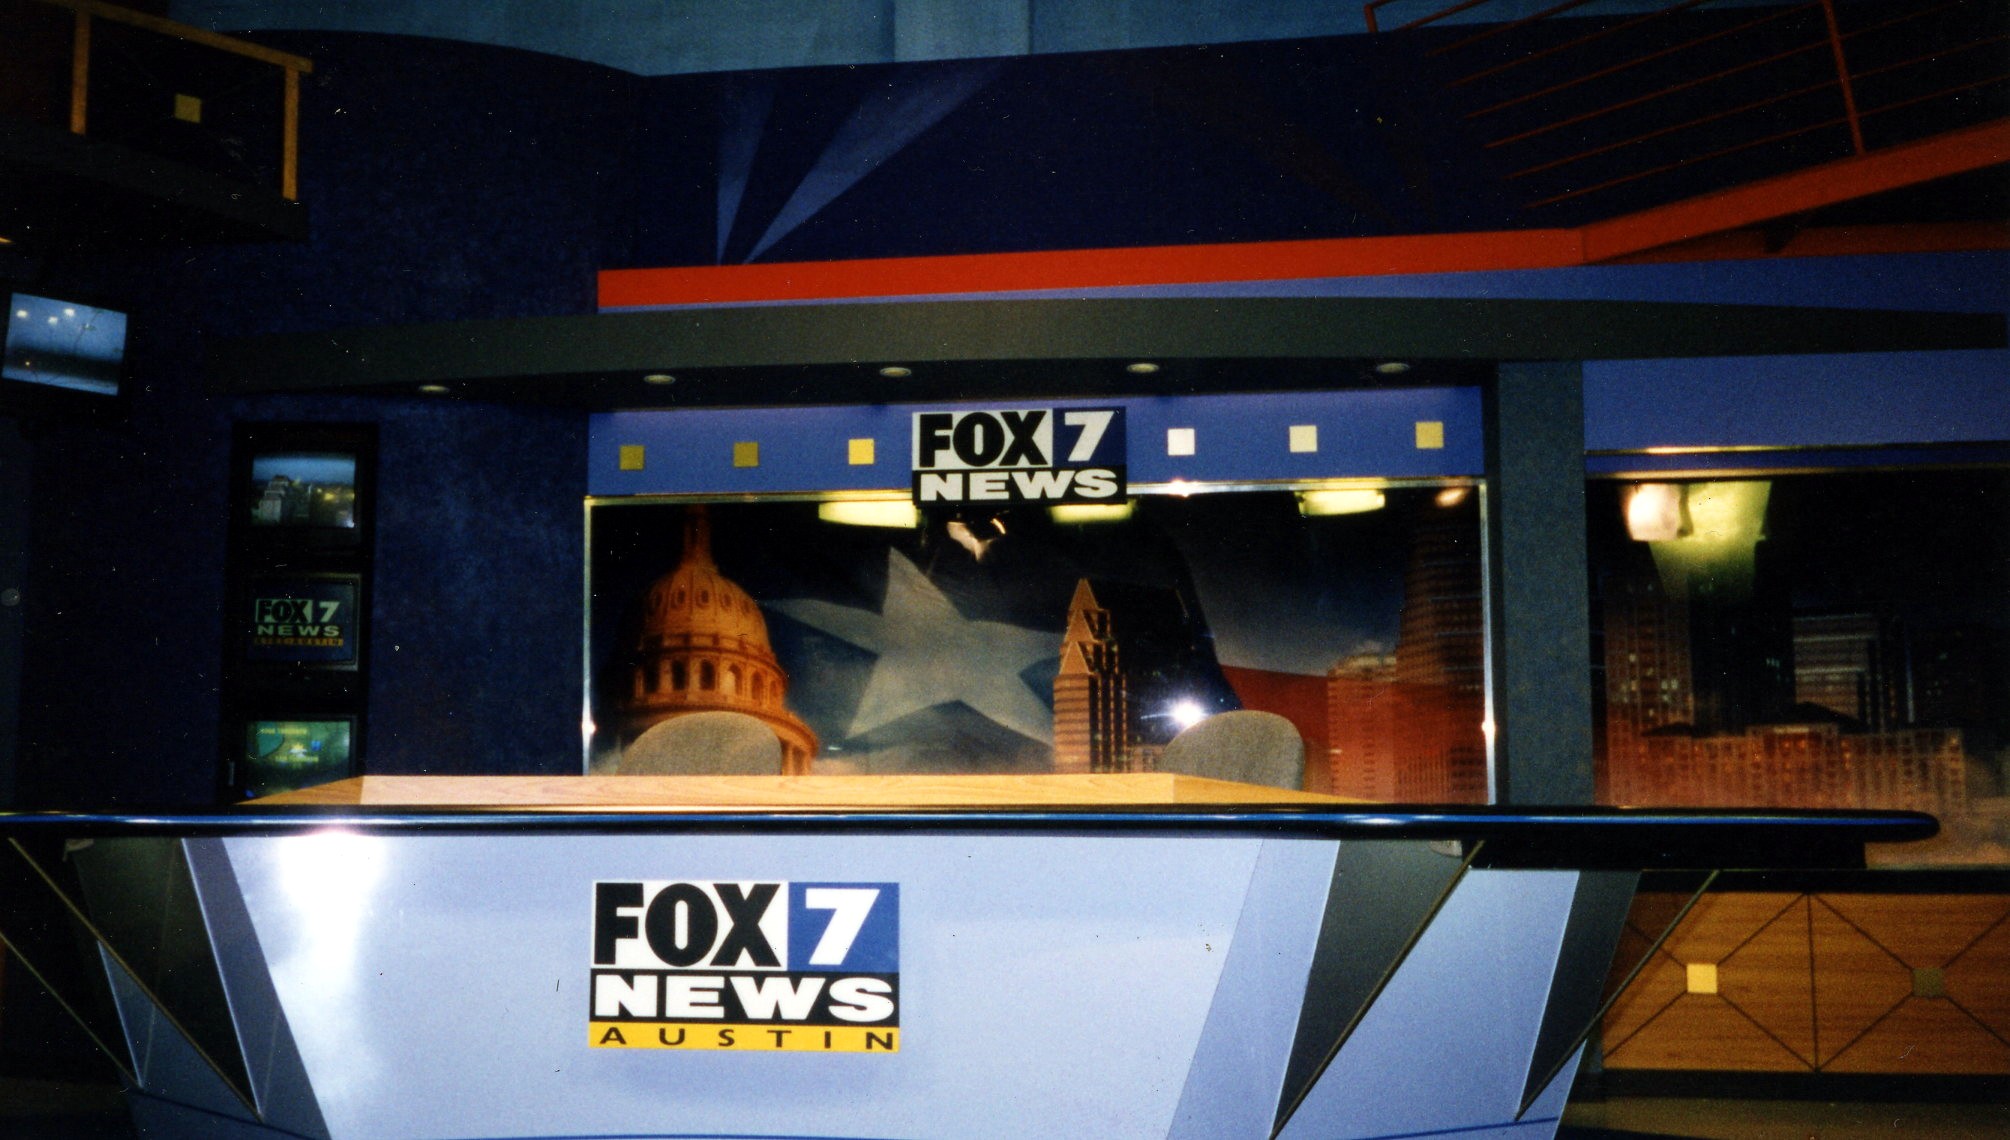 Ktbc Fox News Desk Description With Backlit Signage